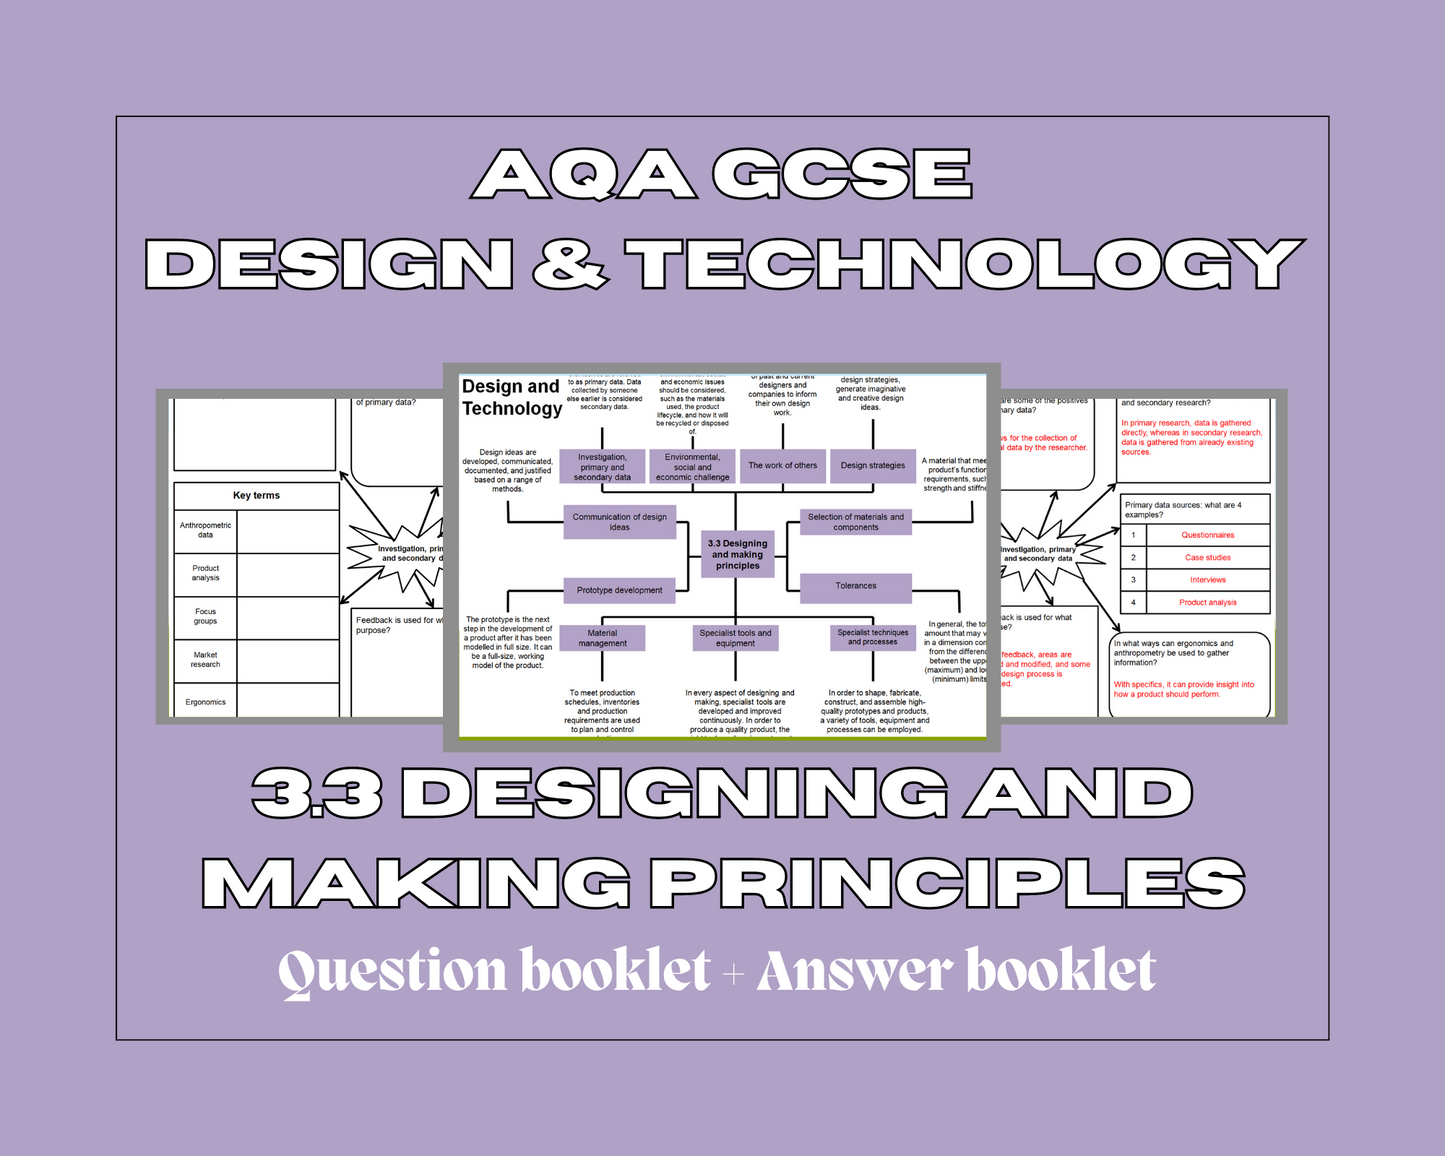 3.3 Designing and making principles - Mind Maps